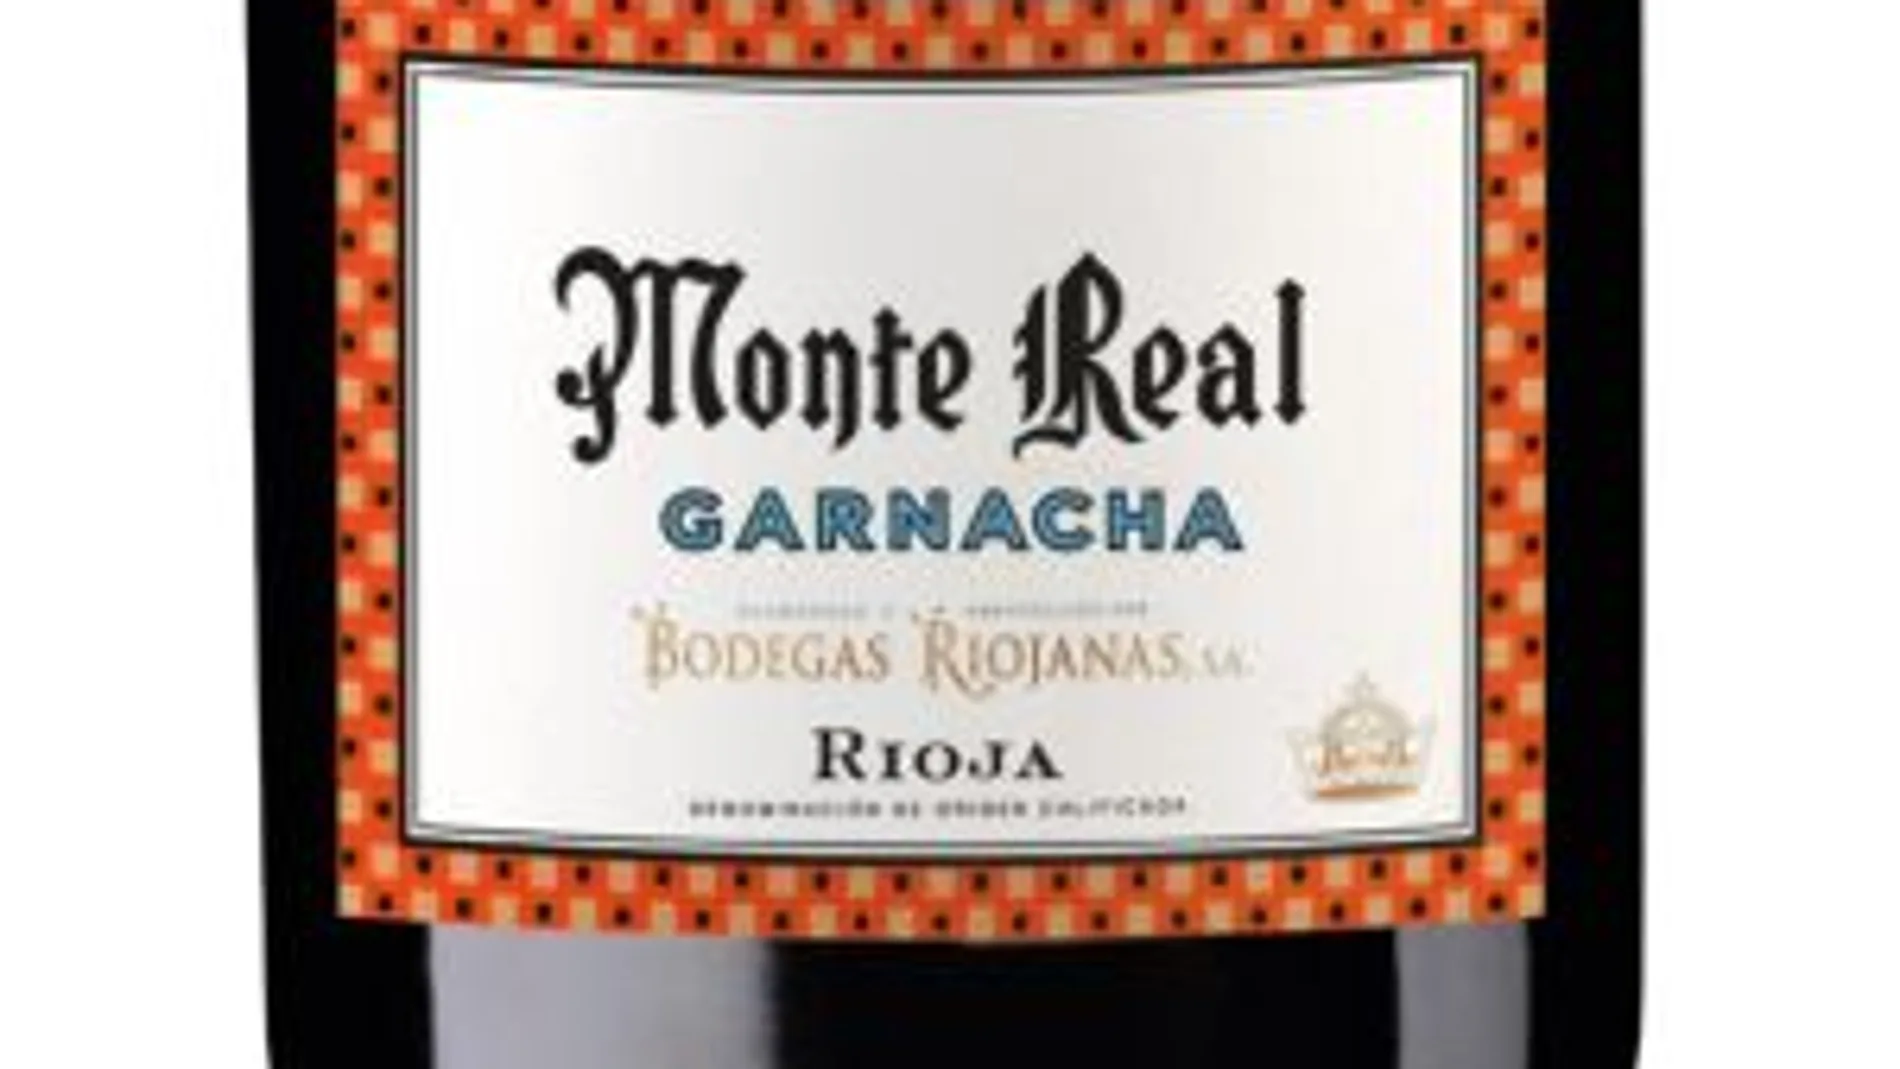 Monte Real Garnacha de Bodegas Riojanas